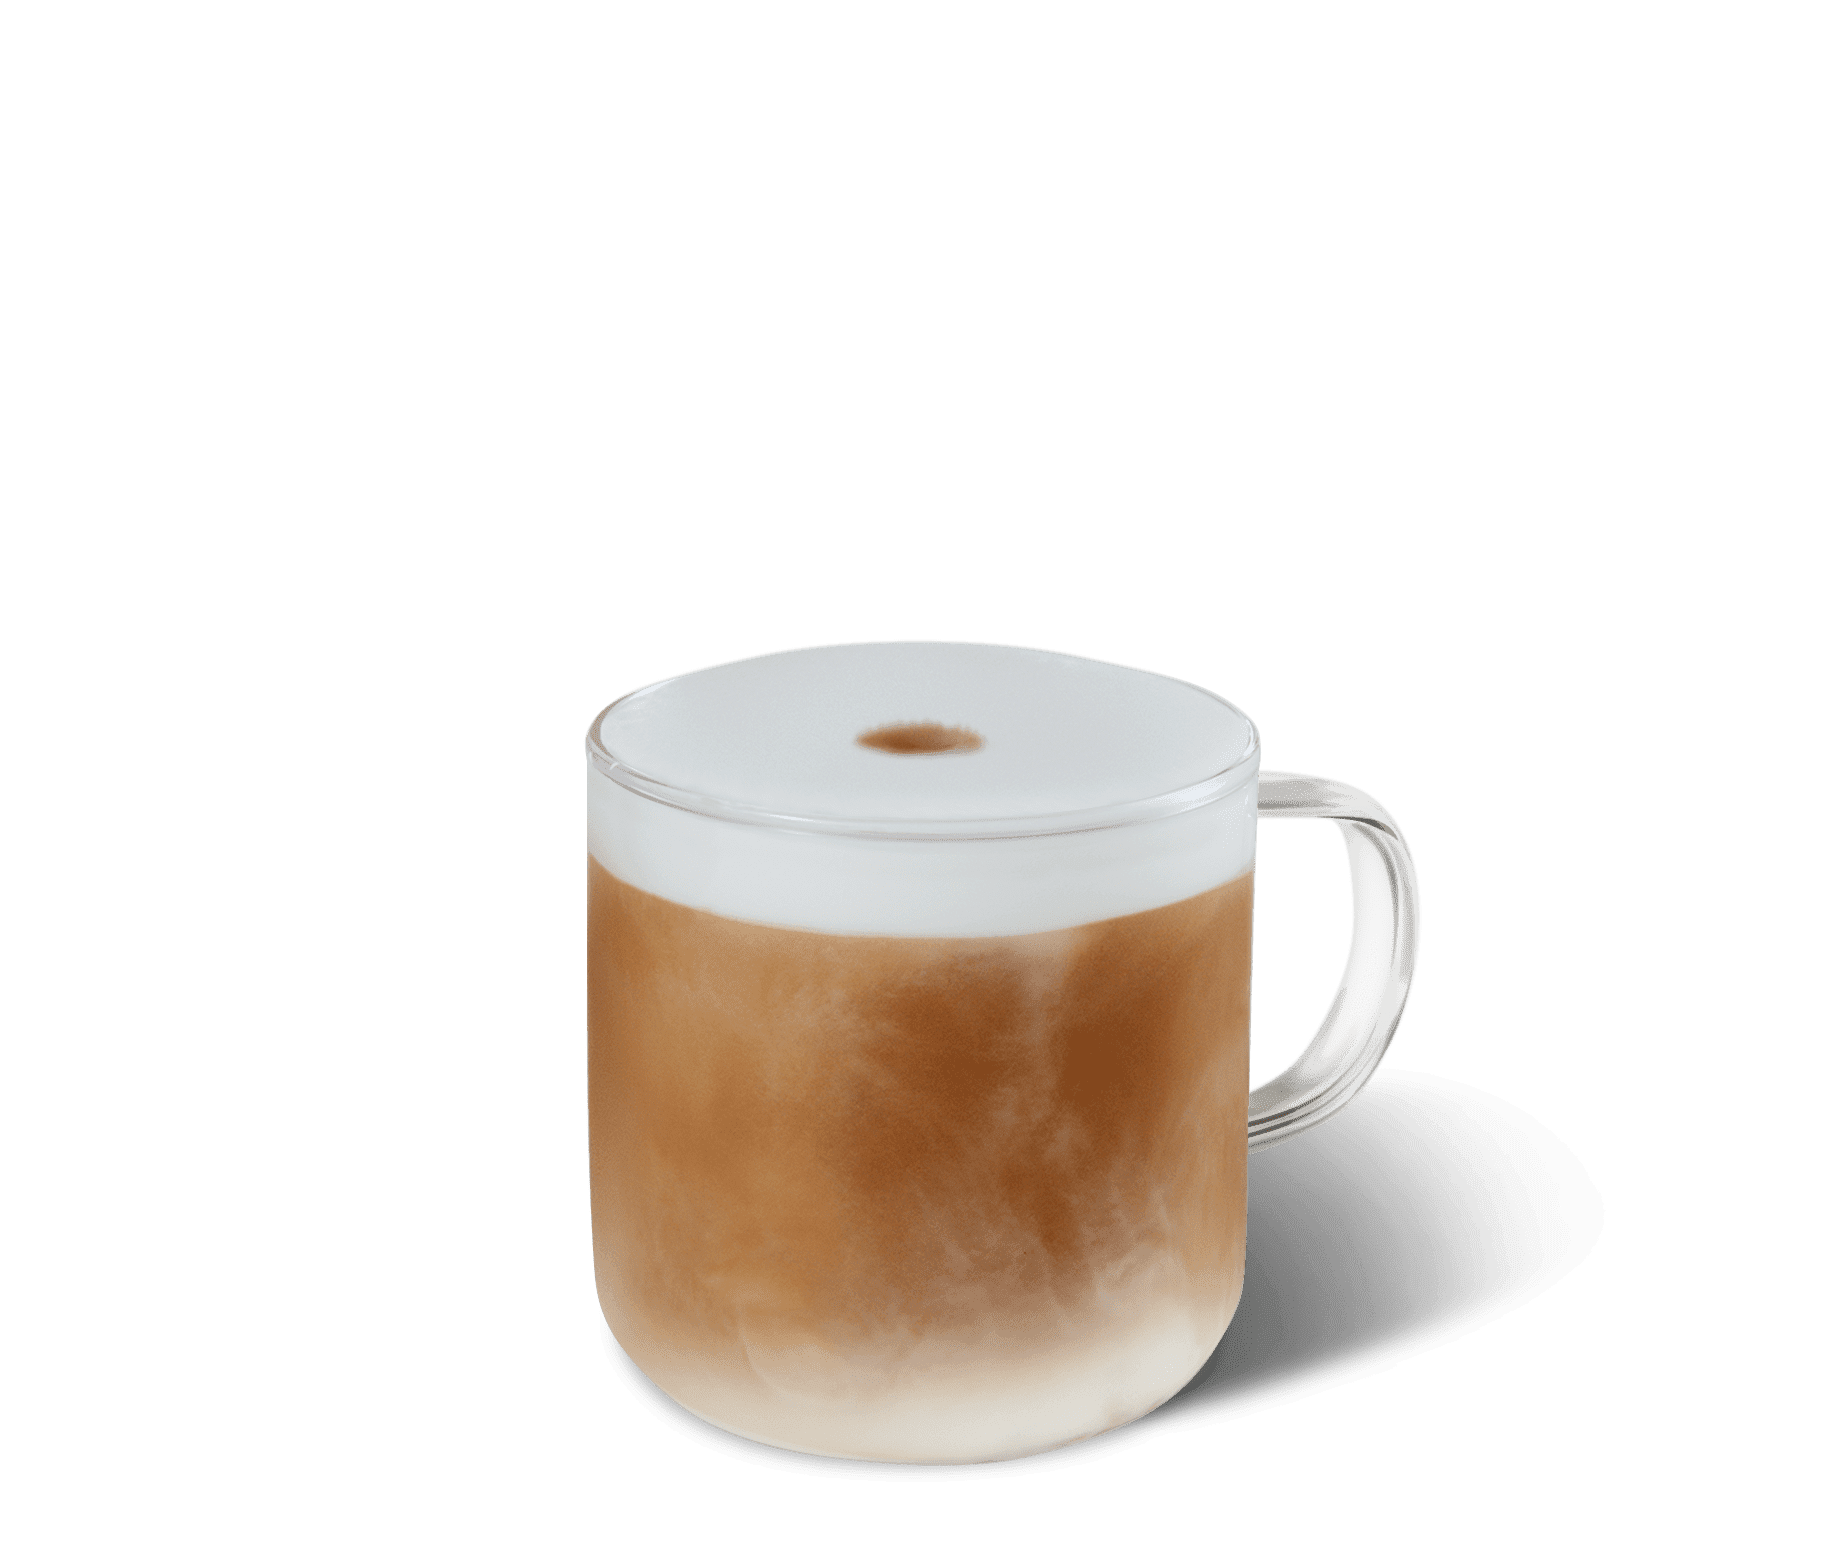 Ontaarden martelen Sanctie Latte Macchiato Recipe | Starbucks® At Home